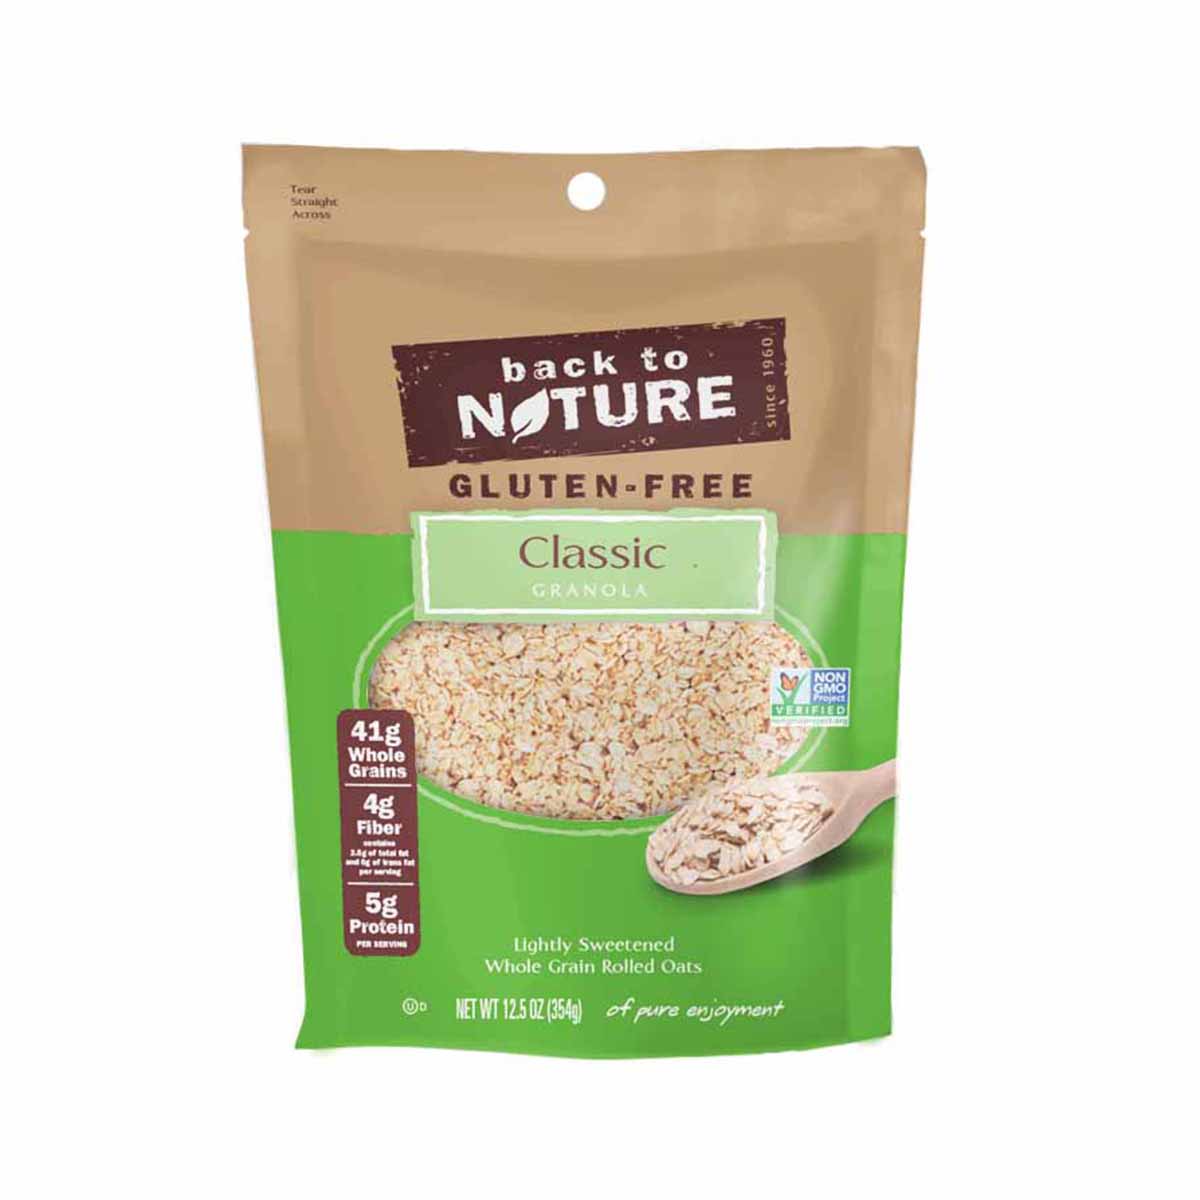 BACK TO NATURE: Gluten-Free Classic Granola, 12.5 oz - 0819898012008